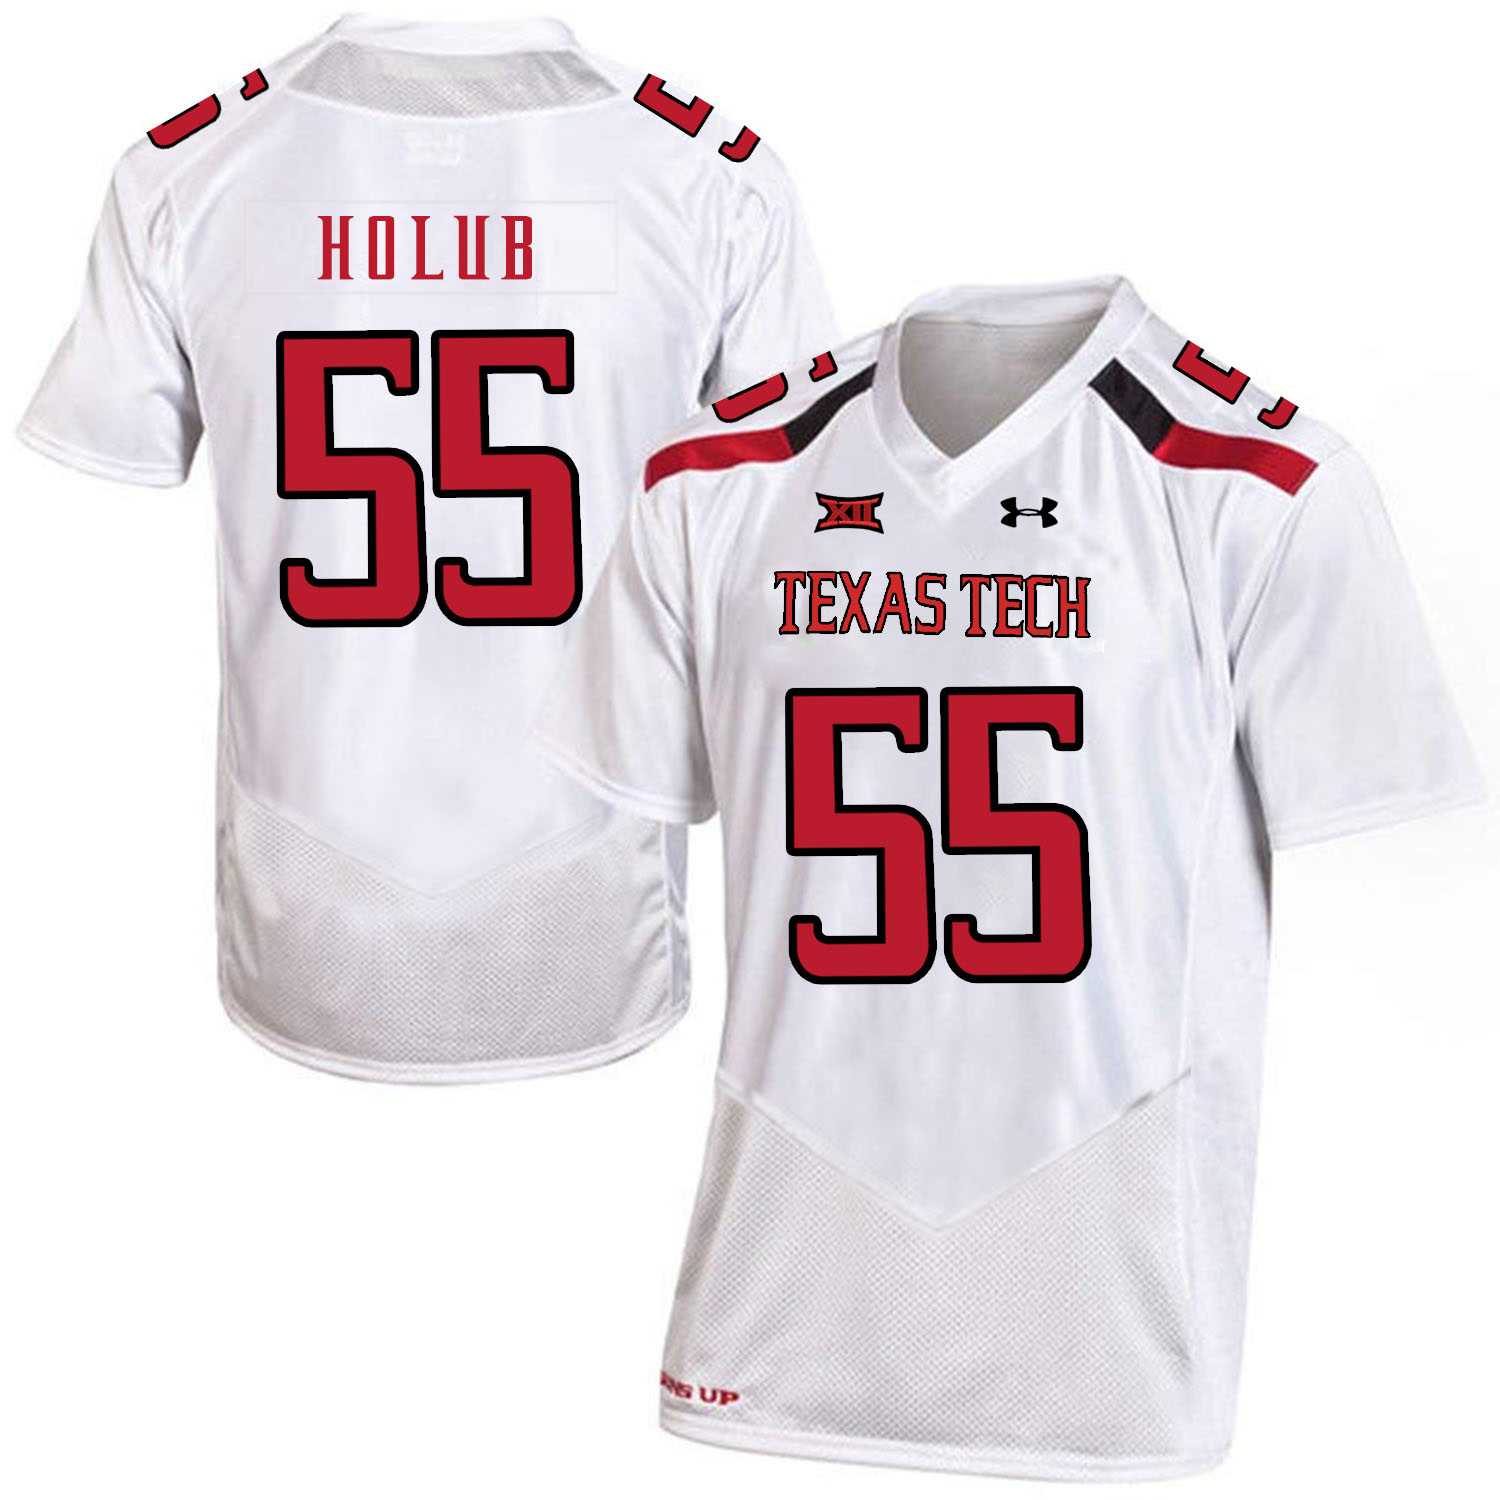 Texas Tech Red Raiders 55 E.J. Holub White College Football Jersey Dzhi